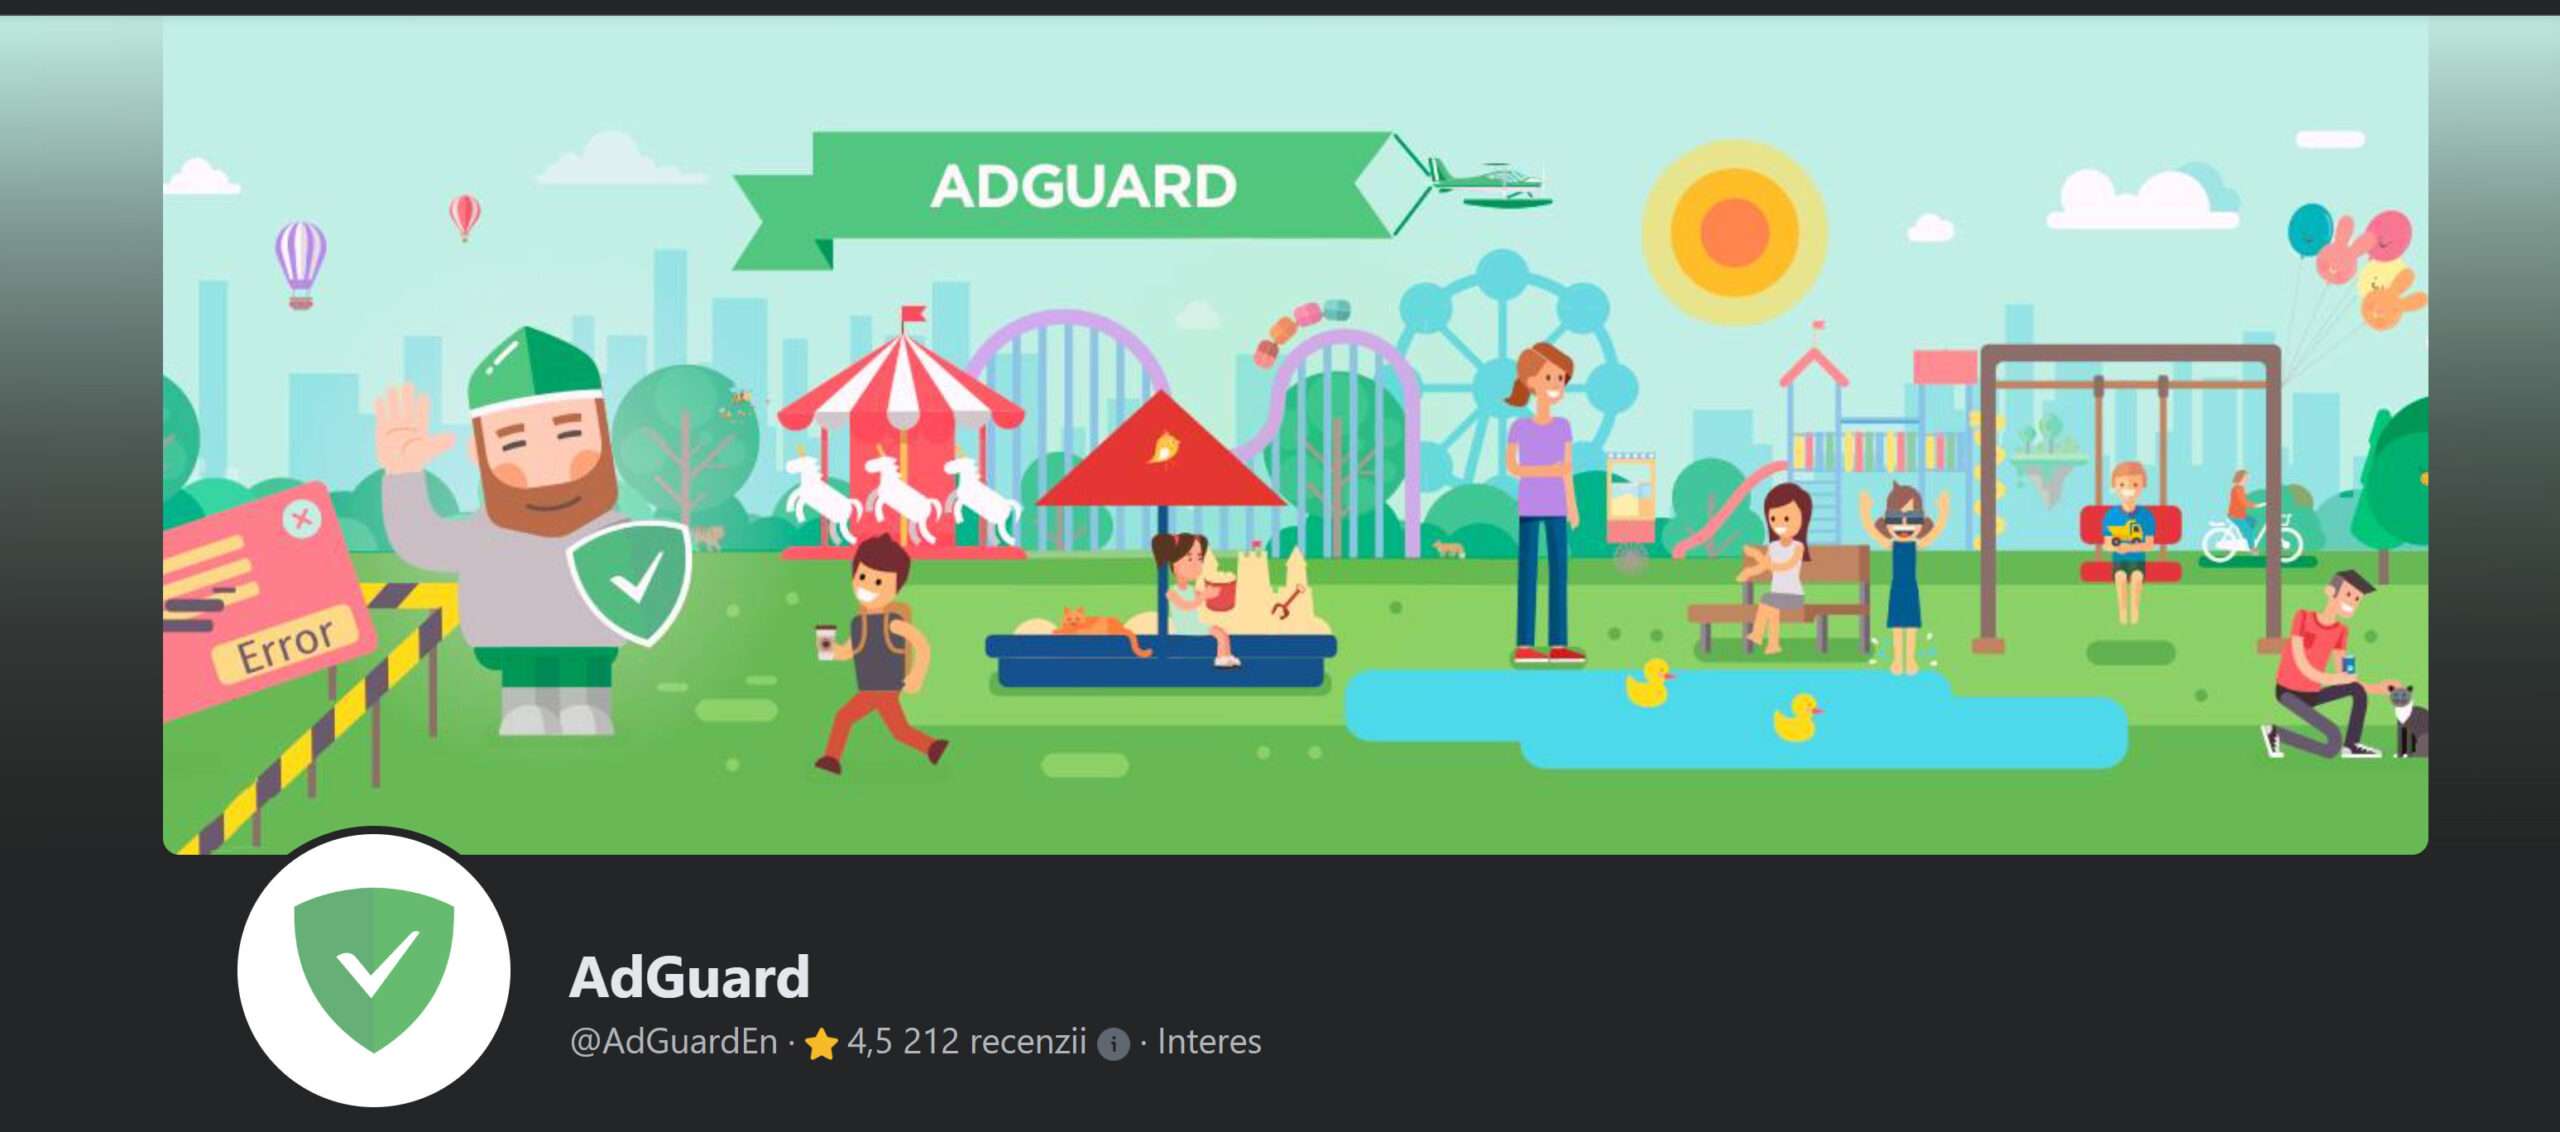 AdGuard-Facebook-scaled.jpg